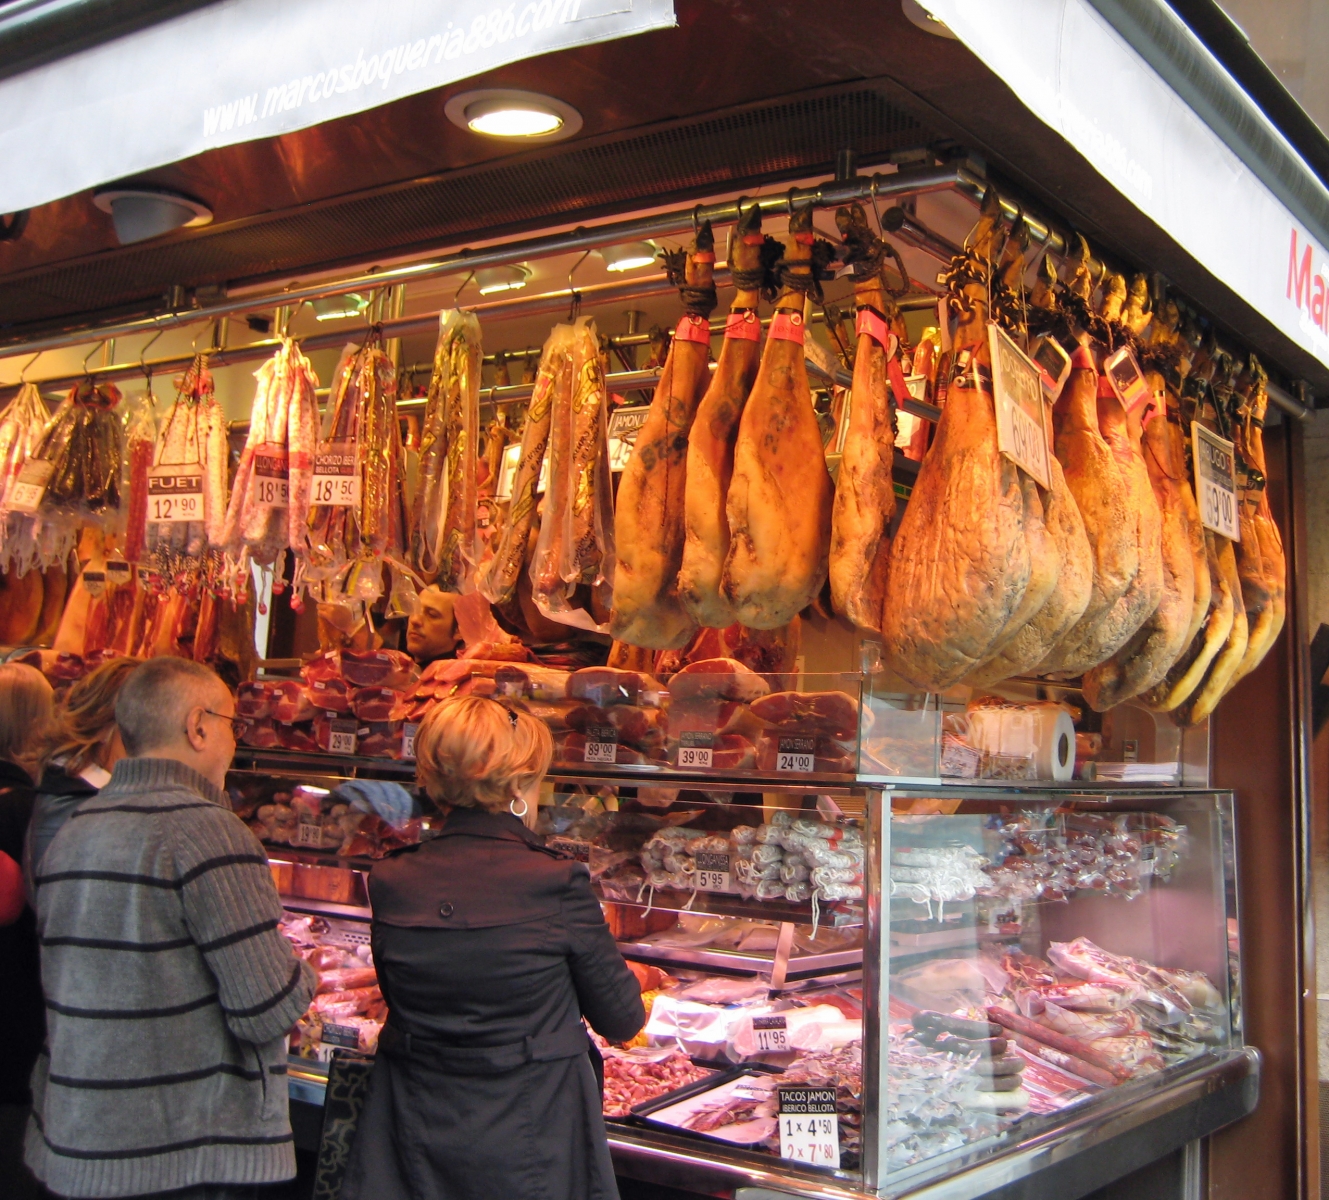 Butcher shop, Farmer's Market, Barcelona, Spain